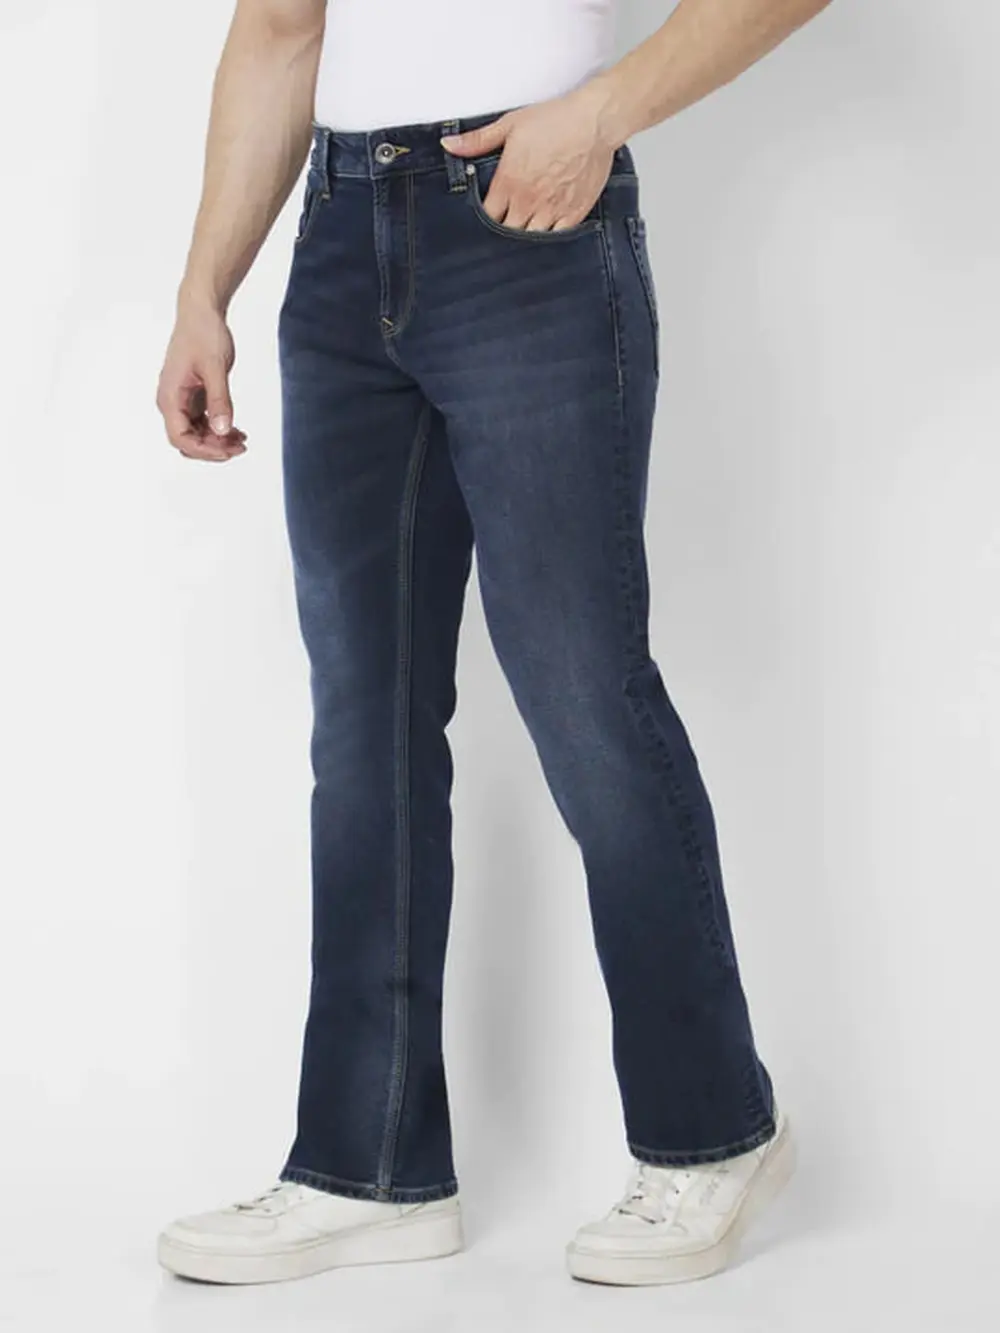 Spykar Men Dark Blue Cotton Stretch Comfort Fit Regular Length Clean Look Mid Rise Jeans (Rafter)